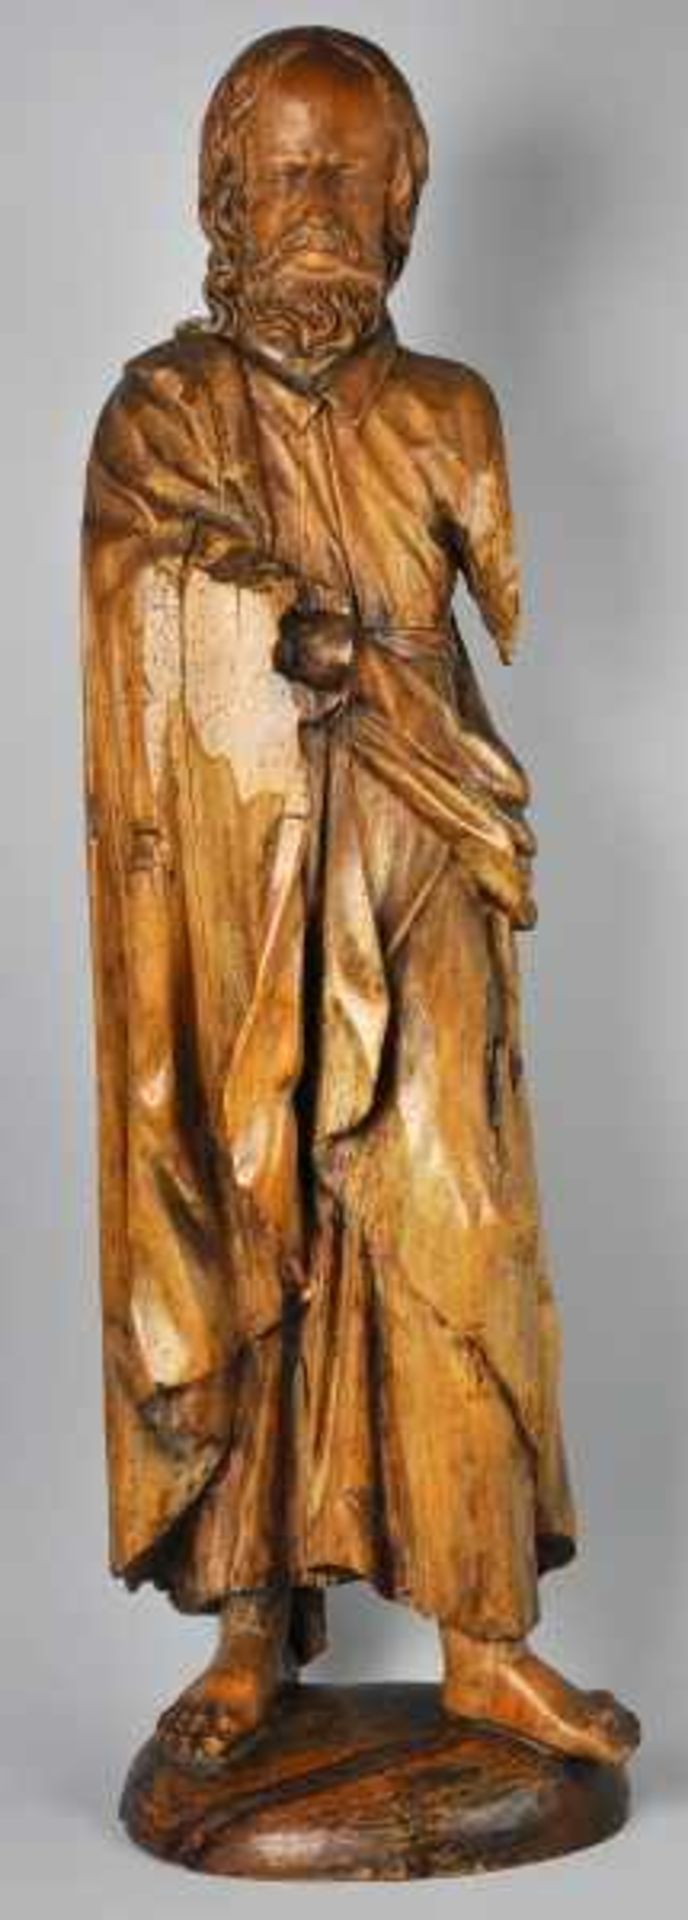 CHRISTUS 3/4 rund geschnitzte Holzfigur, Rückseite gehöhlt, 17./18.Jh, auf späterer ovaler Basis,